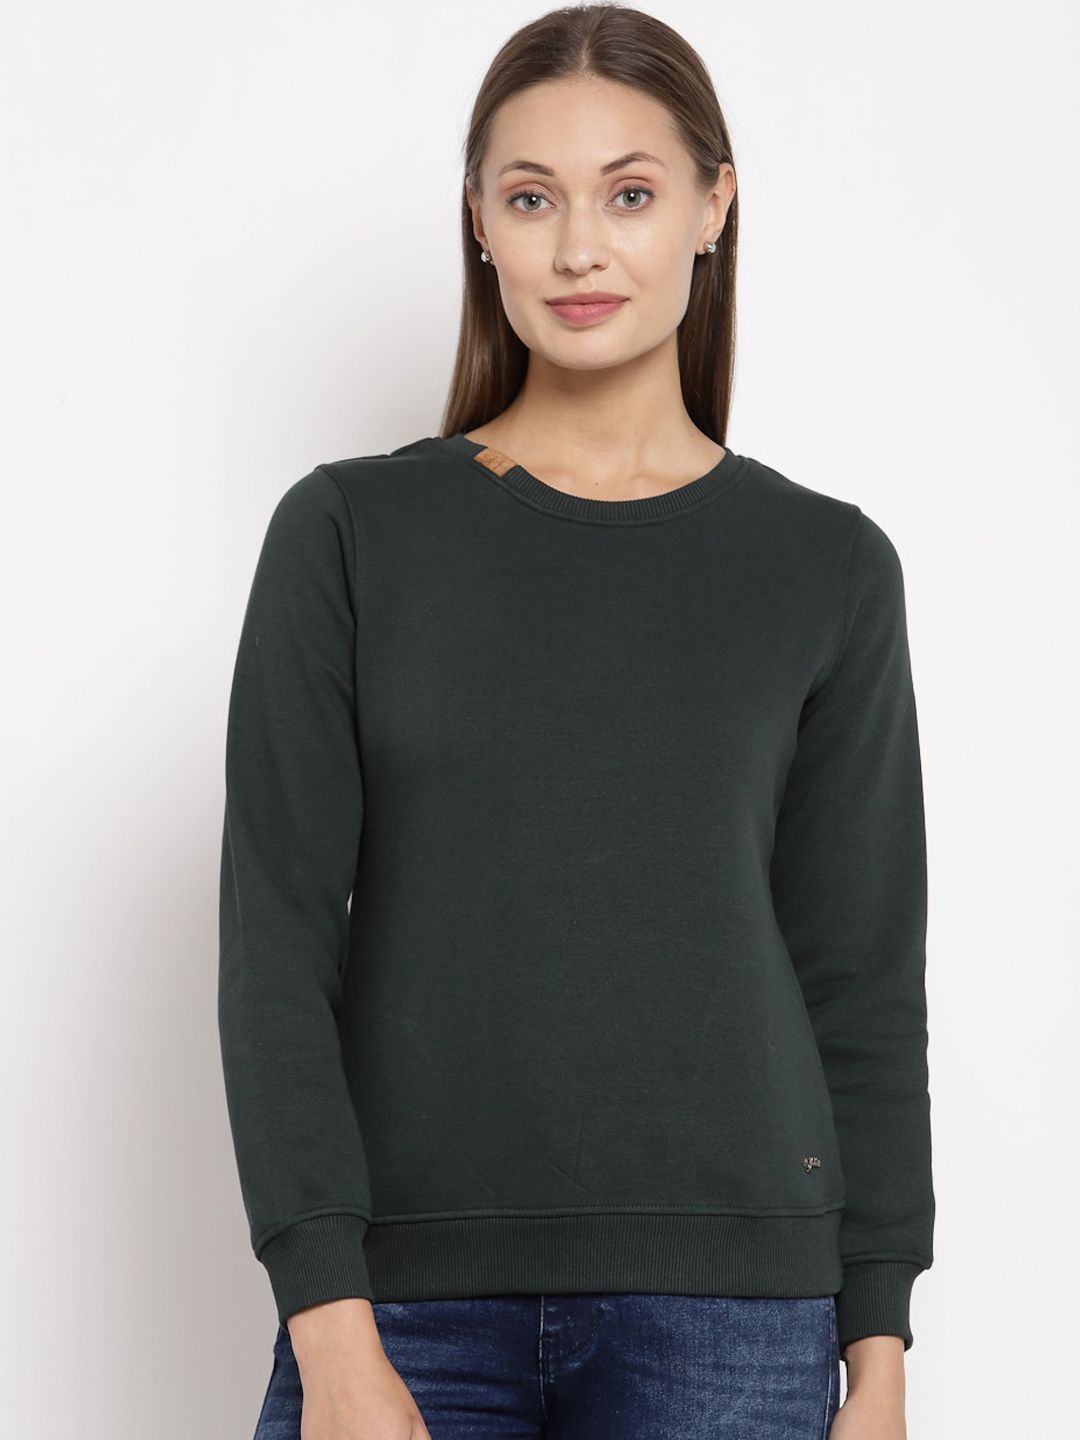 Juelle Women Green Sweatshirt Price in India